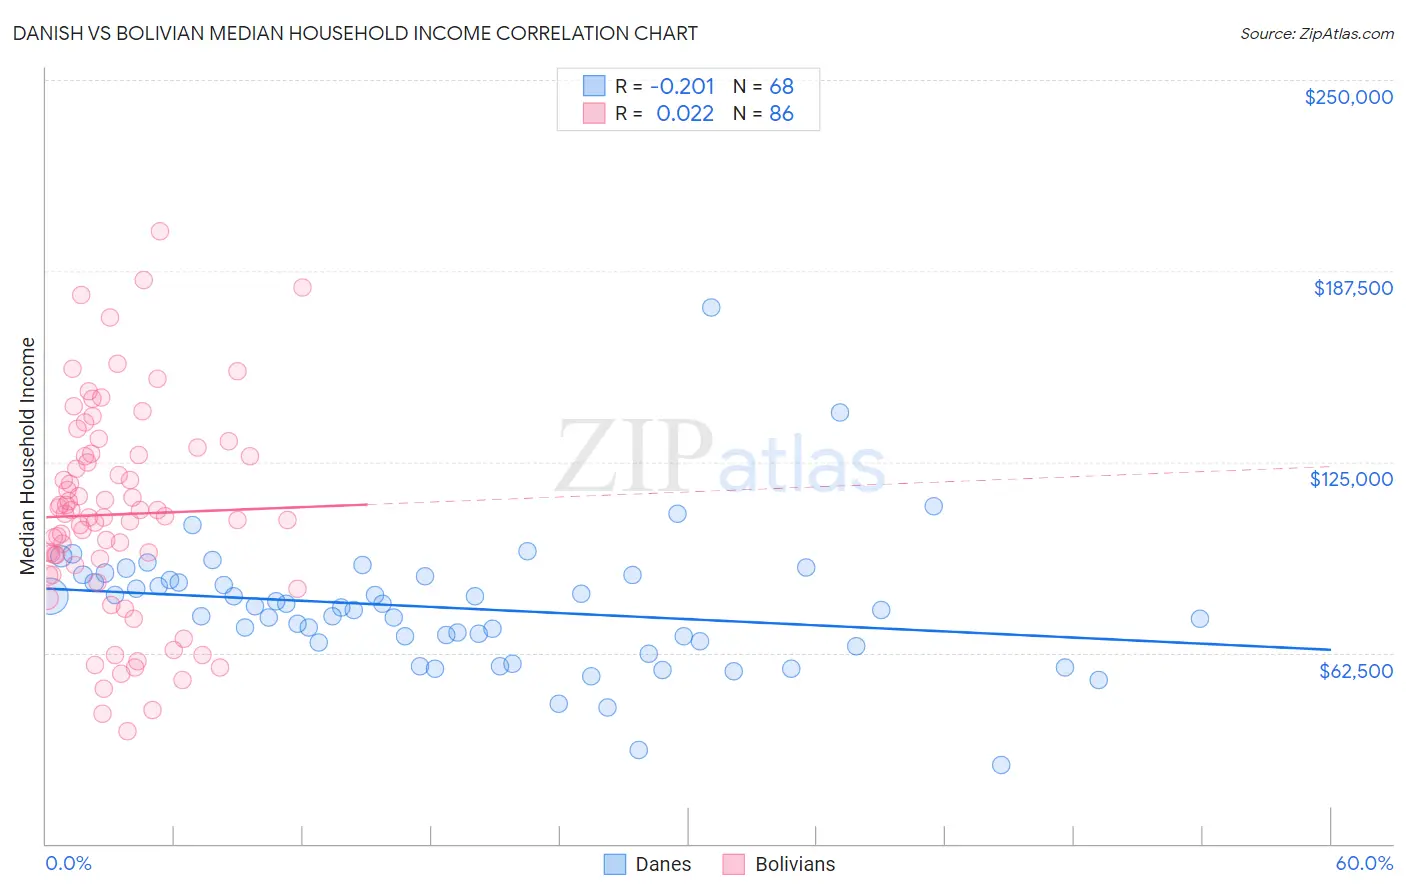 Danish vs Bolivian Median Household Income